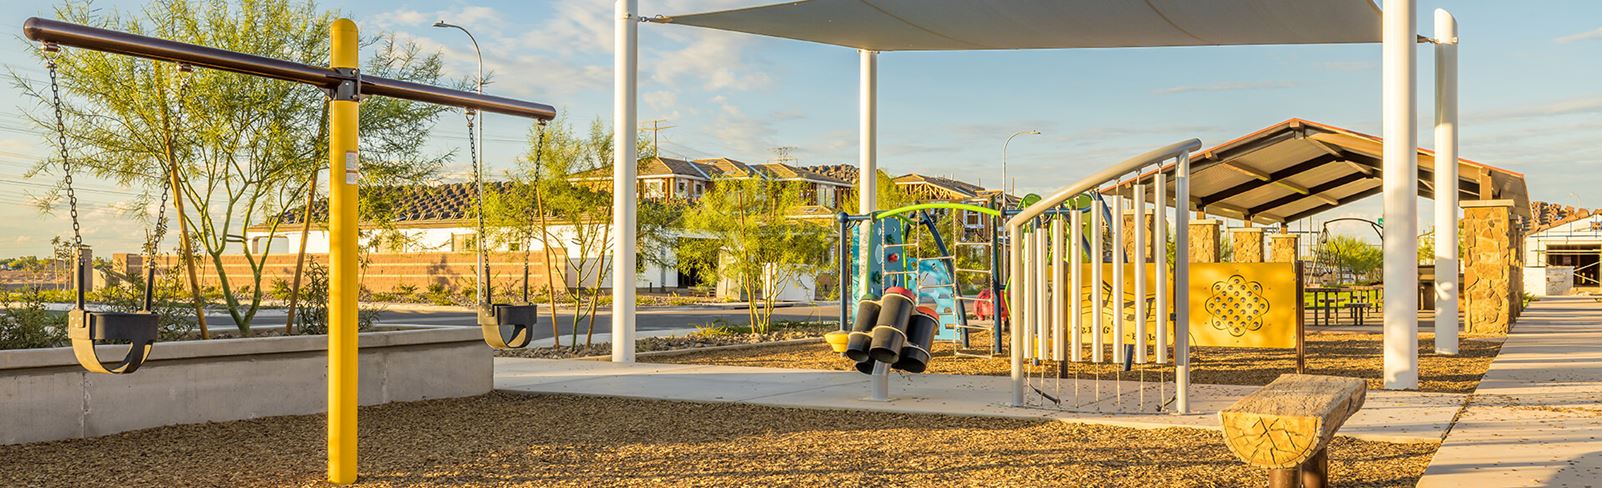 Drift Way Park playground at Alamar community in Avondale, AZ